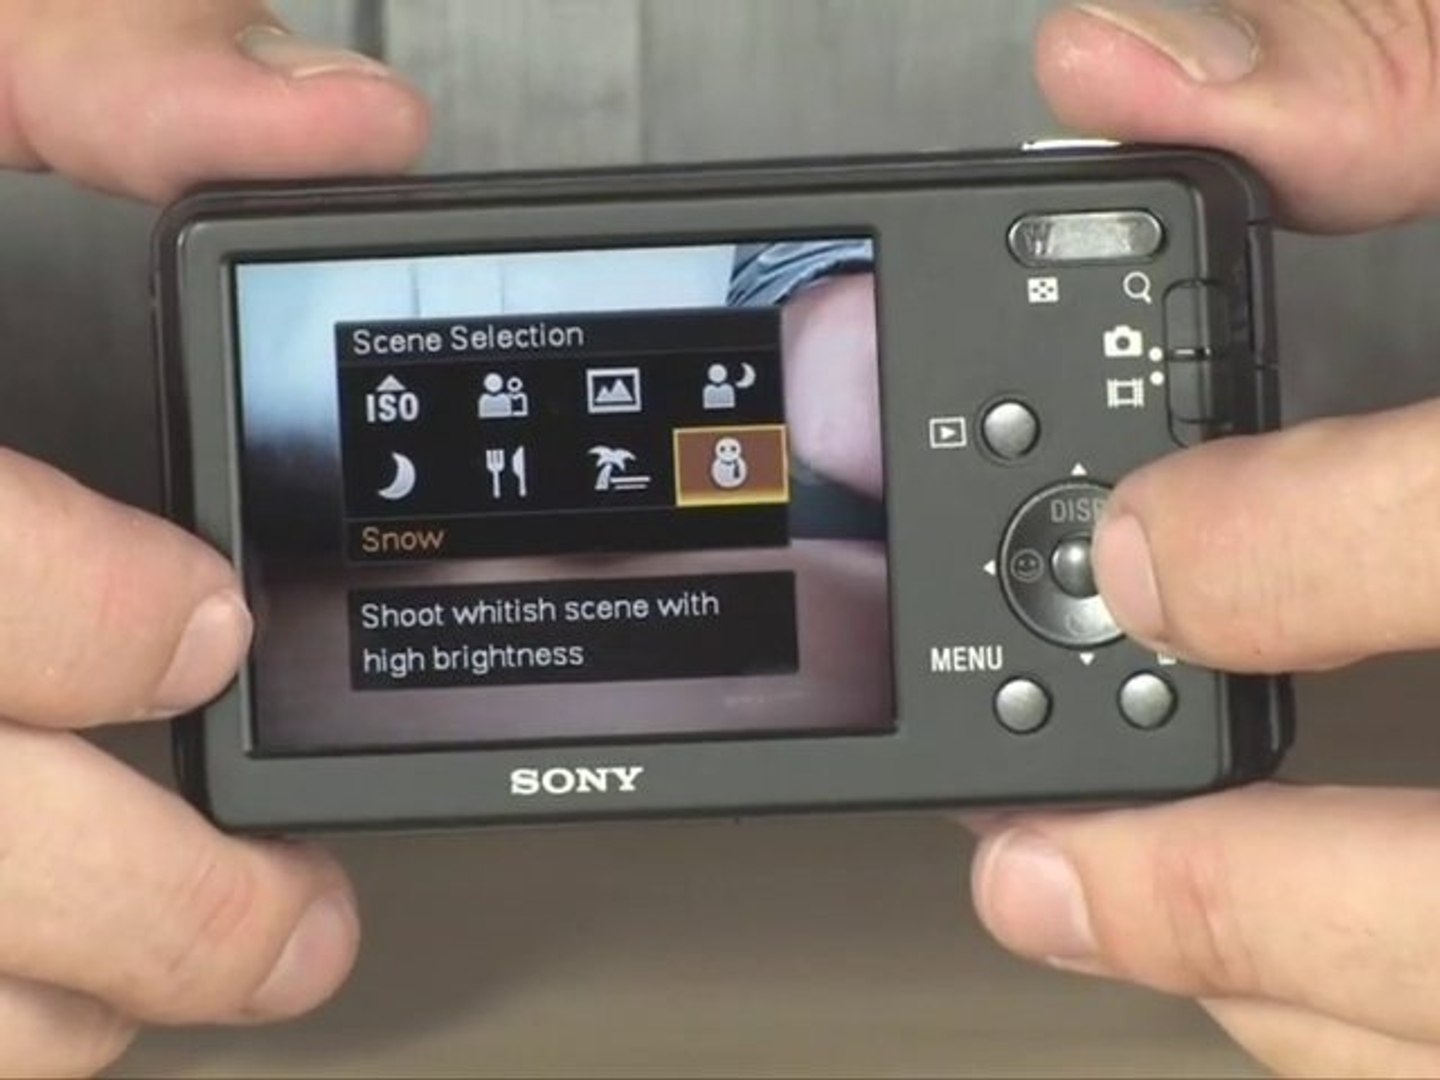 Sony DSC-W310 Cyber-shot Digital Camera - video Dailymotion